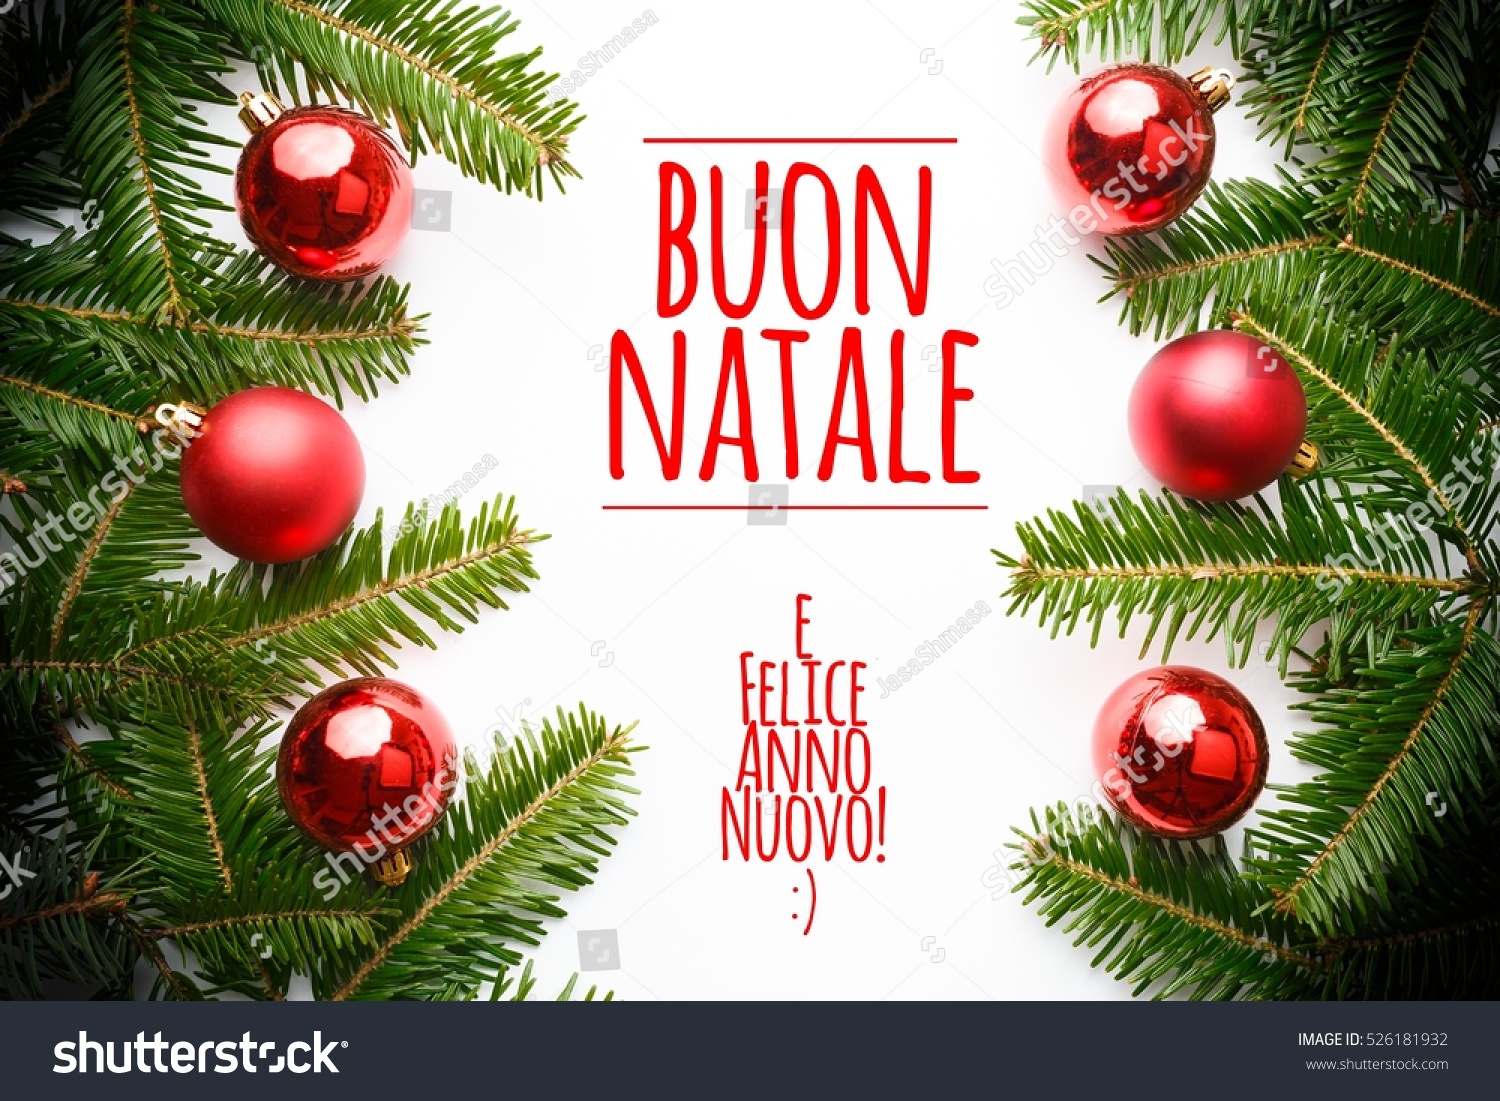 Buon Natale Wishes Italian.Christmas Decorations Greeting Italian Buon Natale Stock Photo Edit Now 526181932